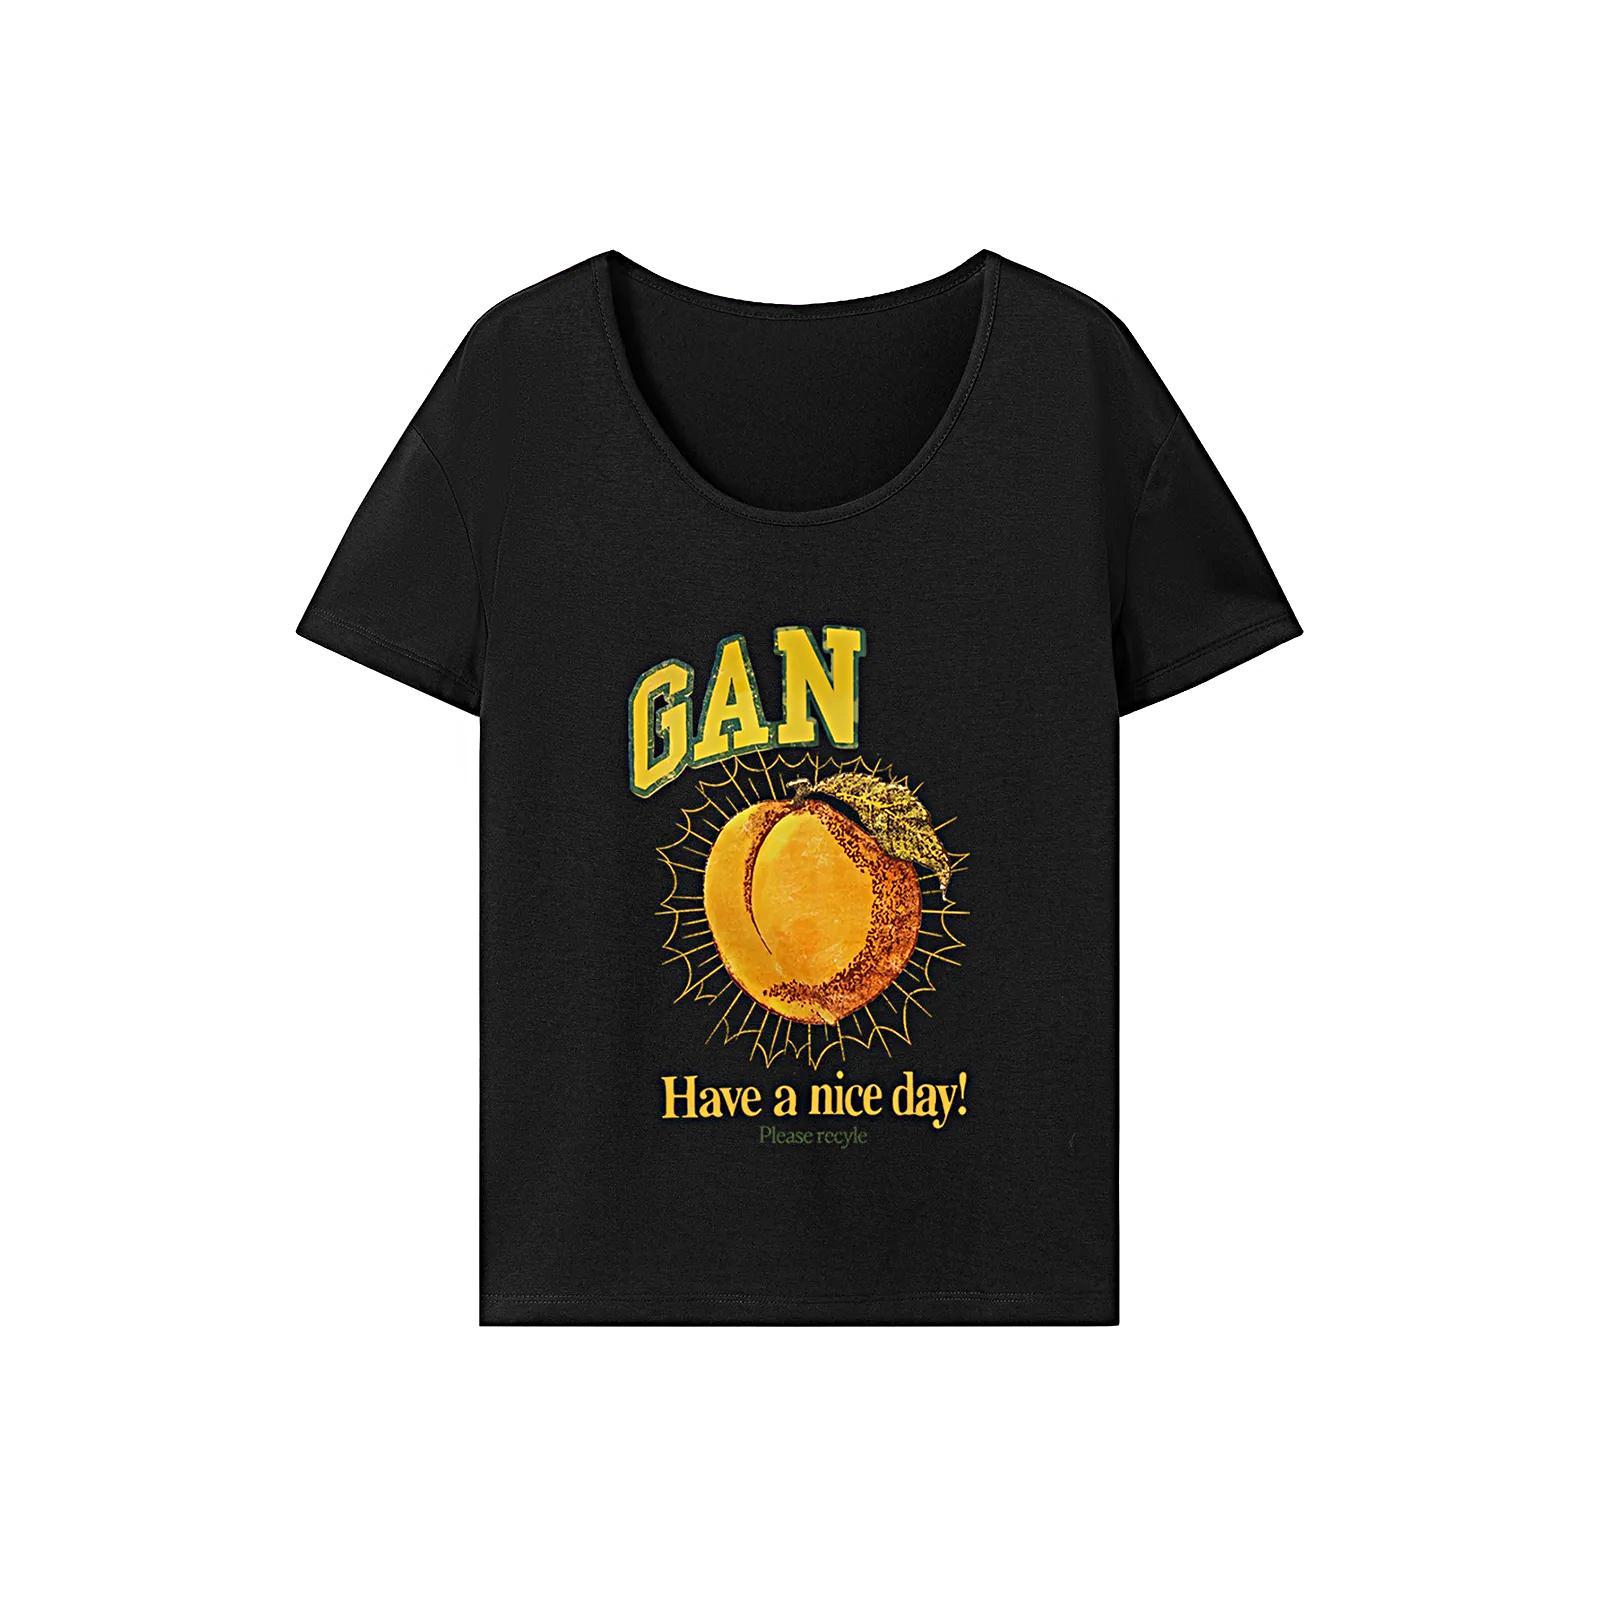 Women's T Shirt Summer Casual Basic Tee Shirt for Commuting Daily Wear Beach XL